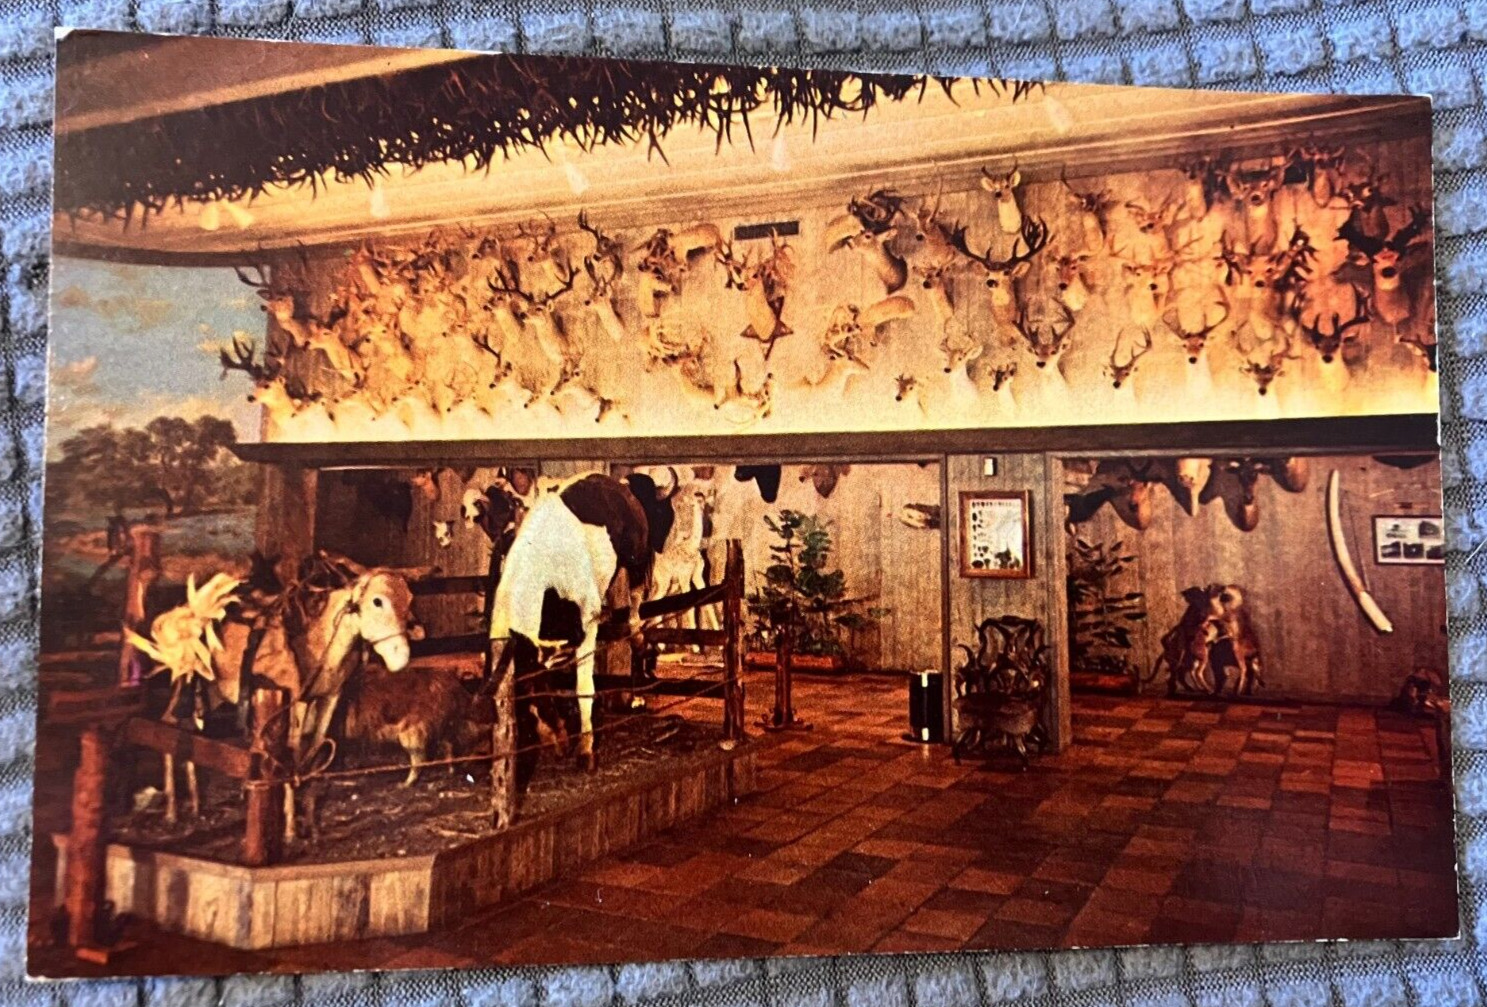 Vintage Postcard - Buckhorn Hall of Horns at Lone Star Brewing in San Antonio TX